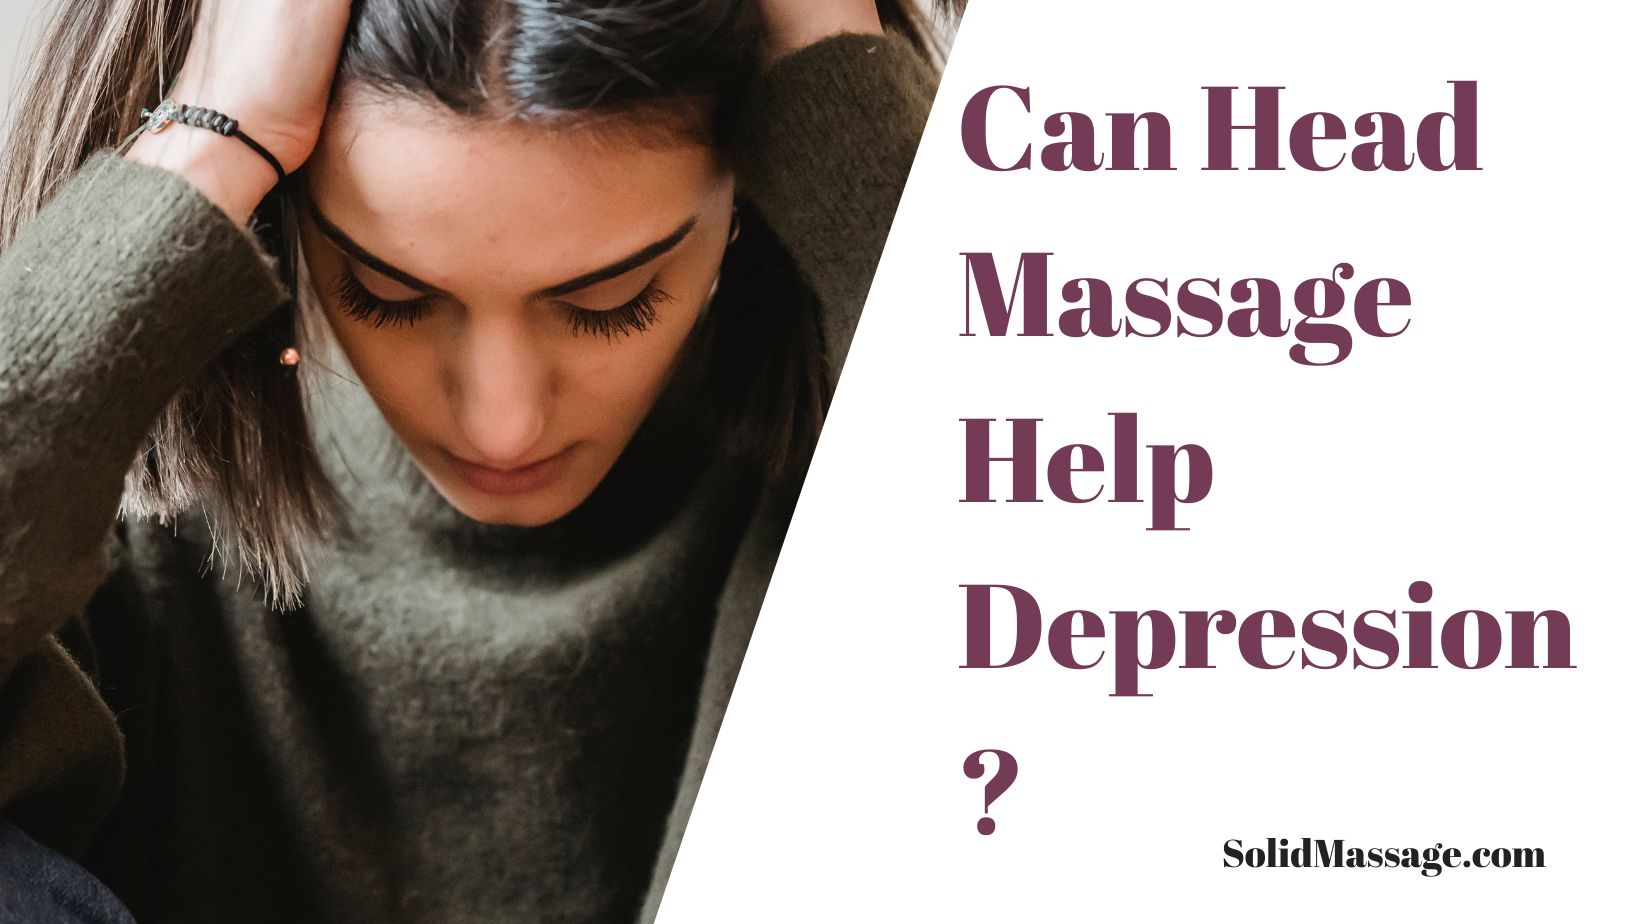 Can Head Massage Help Depression